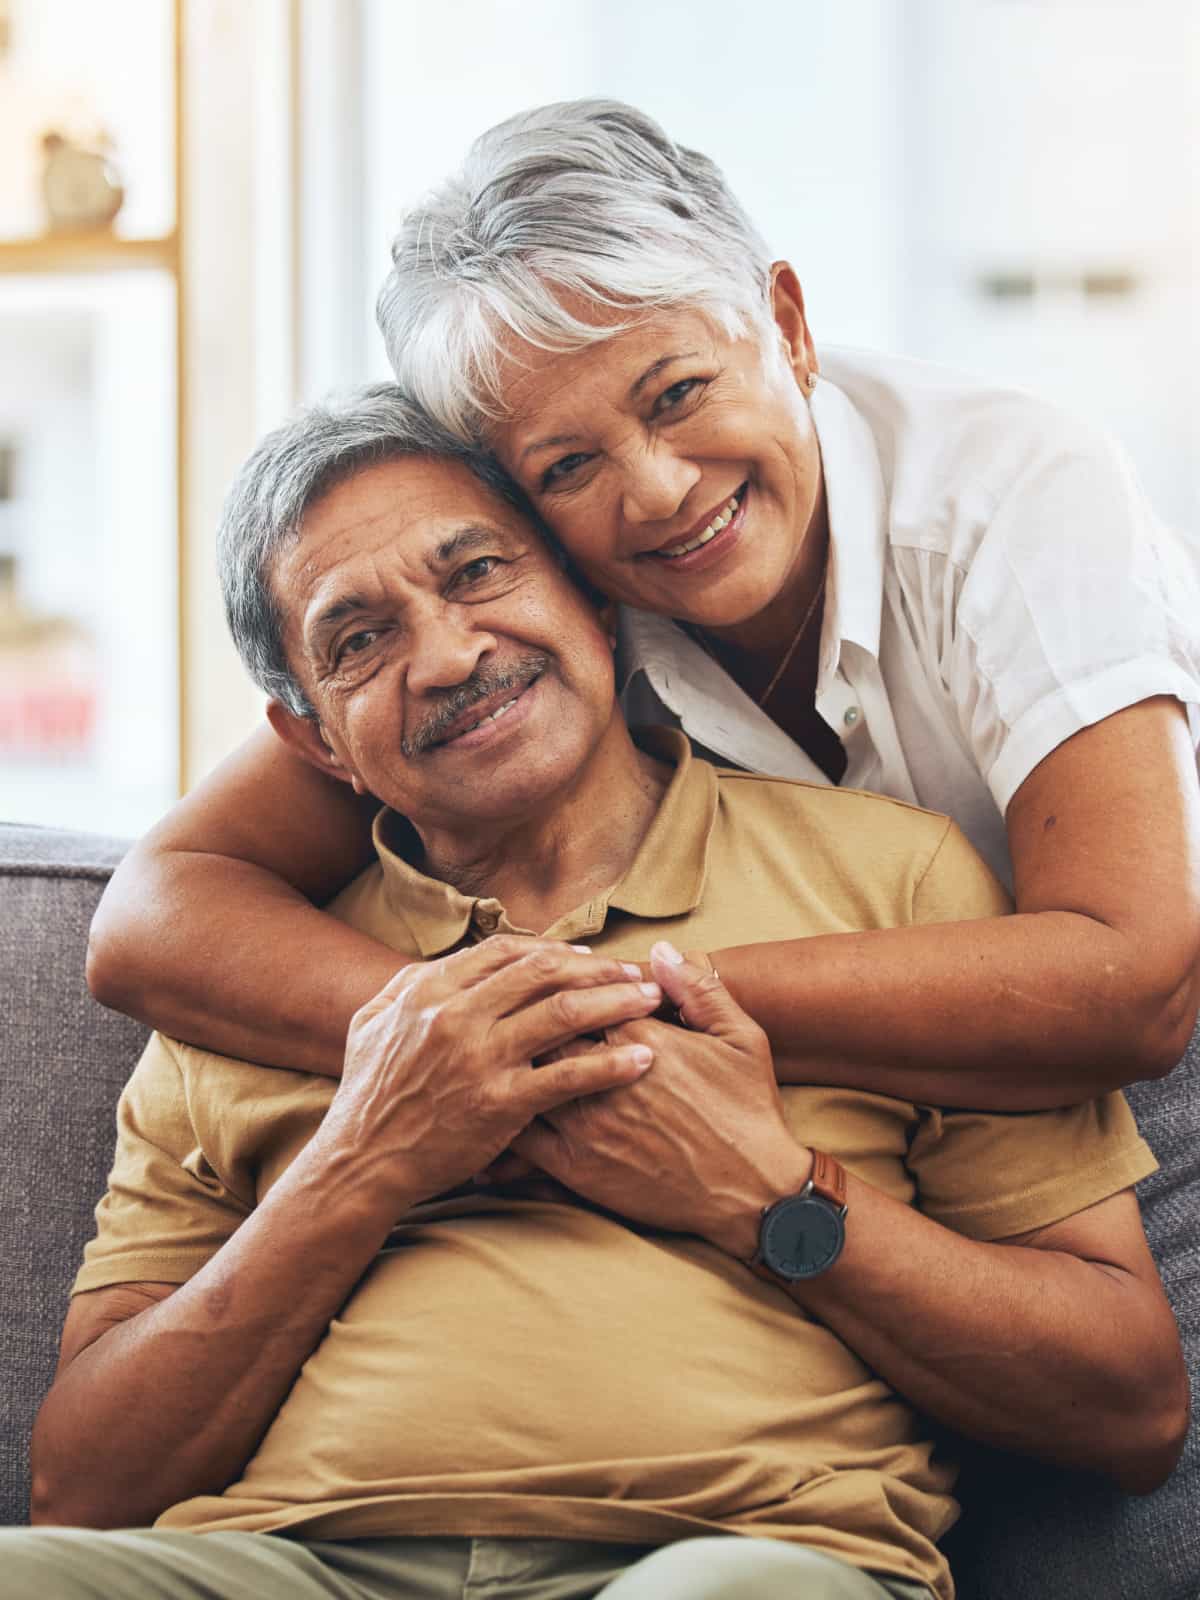 A happy senior couple embrace on their living room sofa.